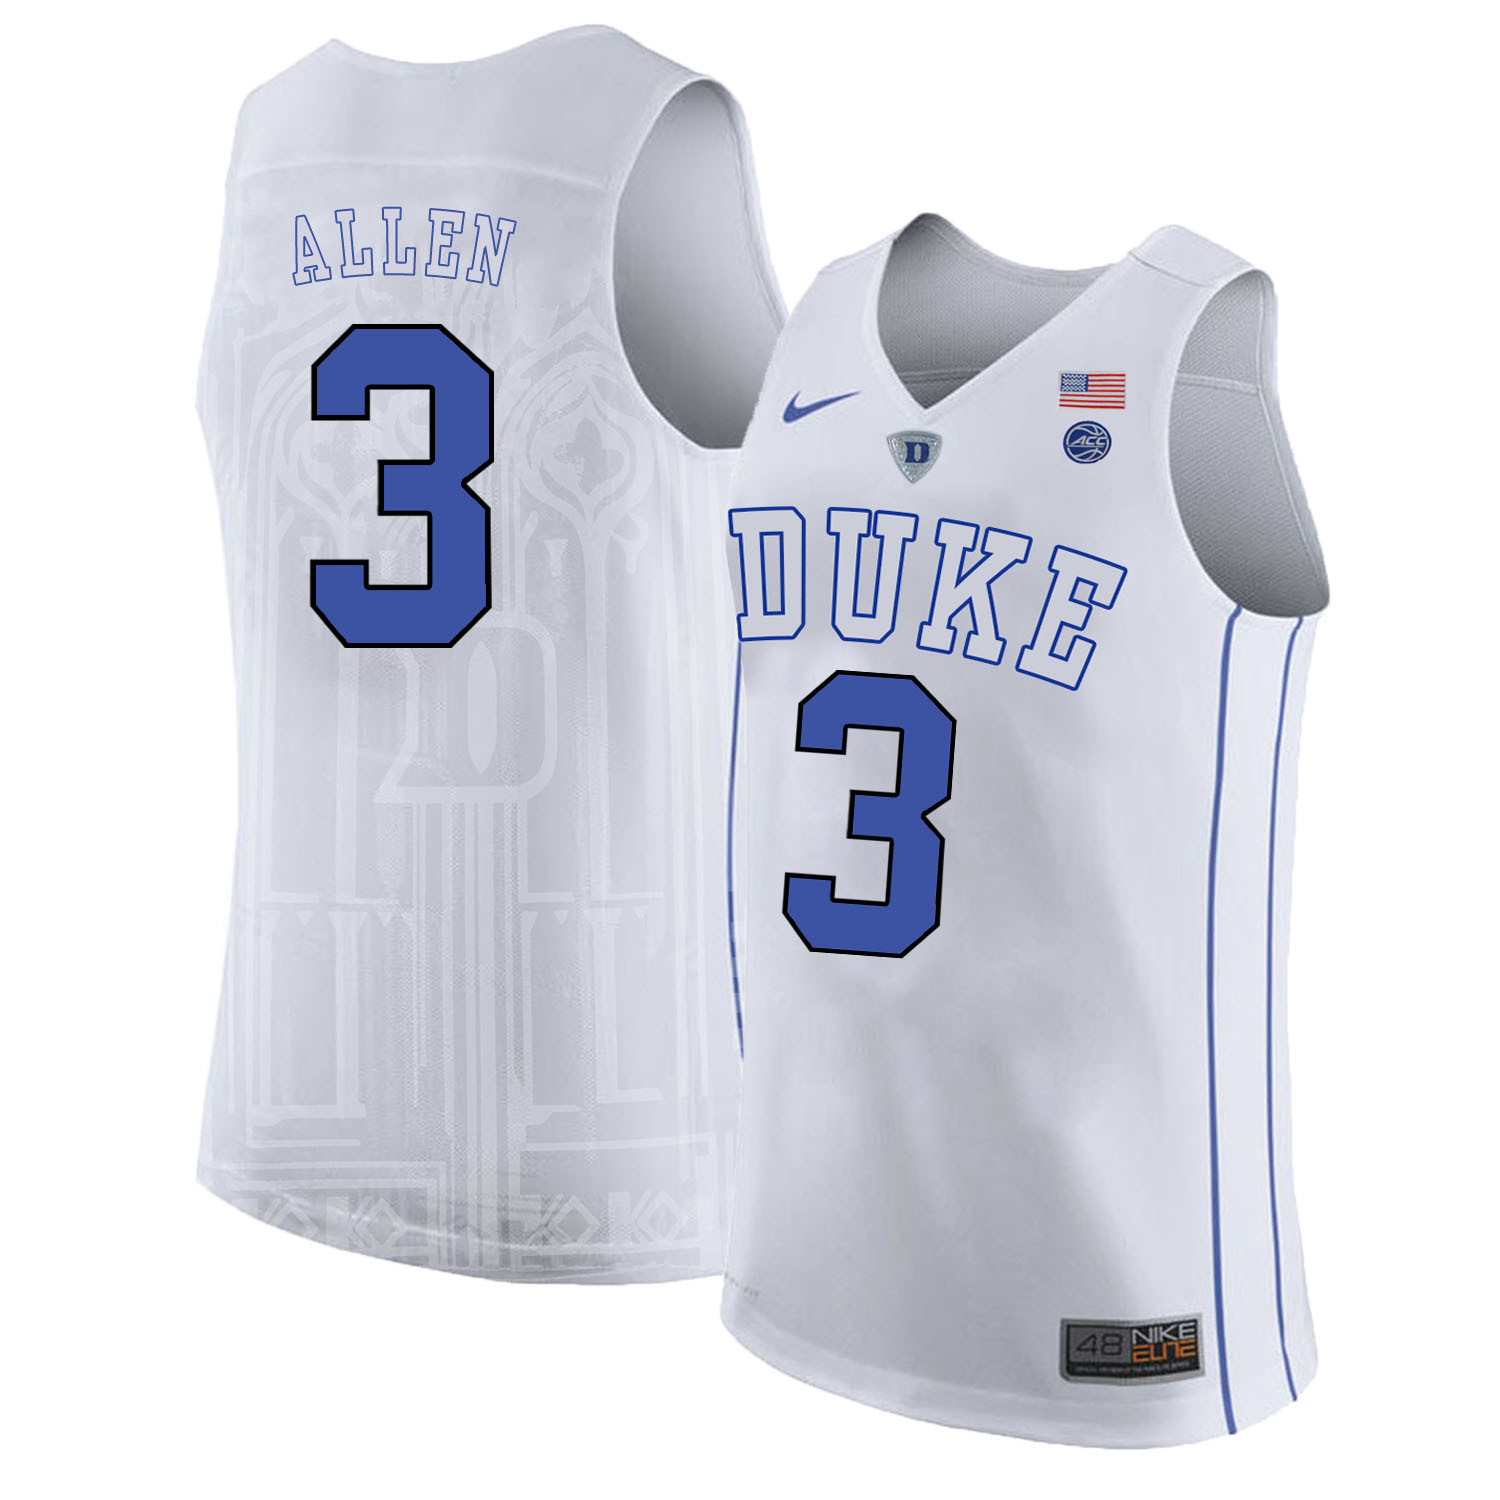 Duke Blue Devils 3 Garyson Allen White Nike College Basketball Jersey